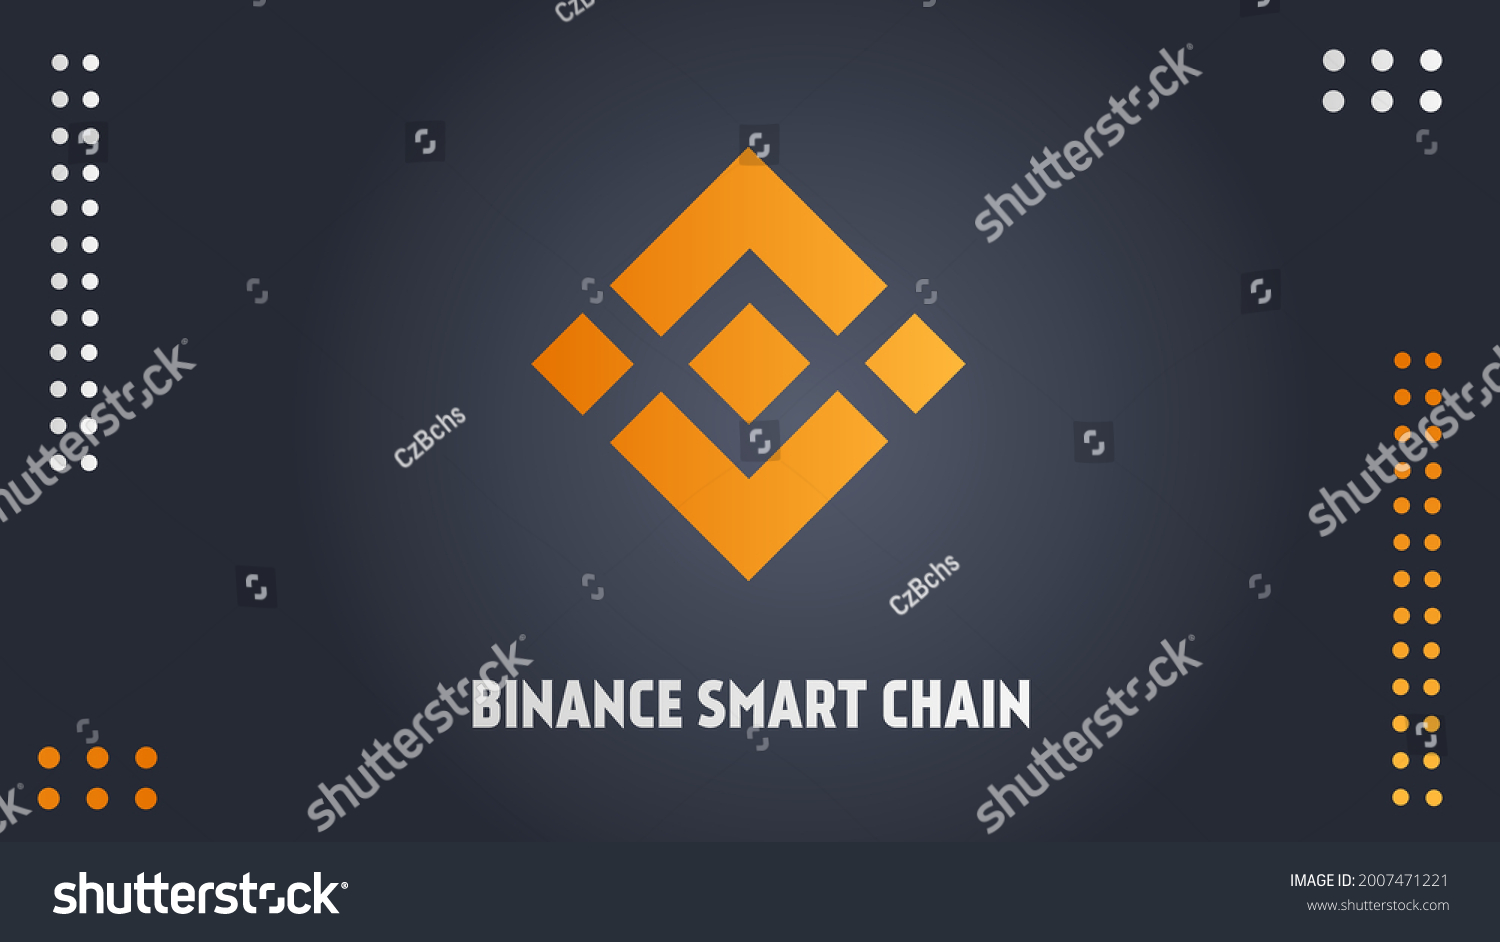 SVG of Binance Smart Chain, BSC,BNB banner with dark background.  For Blockchain, cryptocurrencies.  Flat design minimalist gradient eps 10 svg